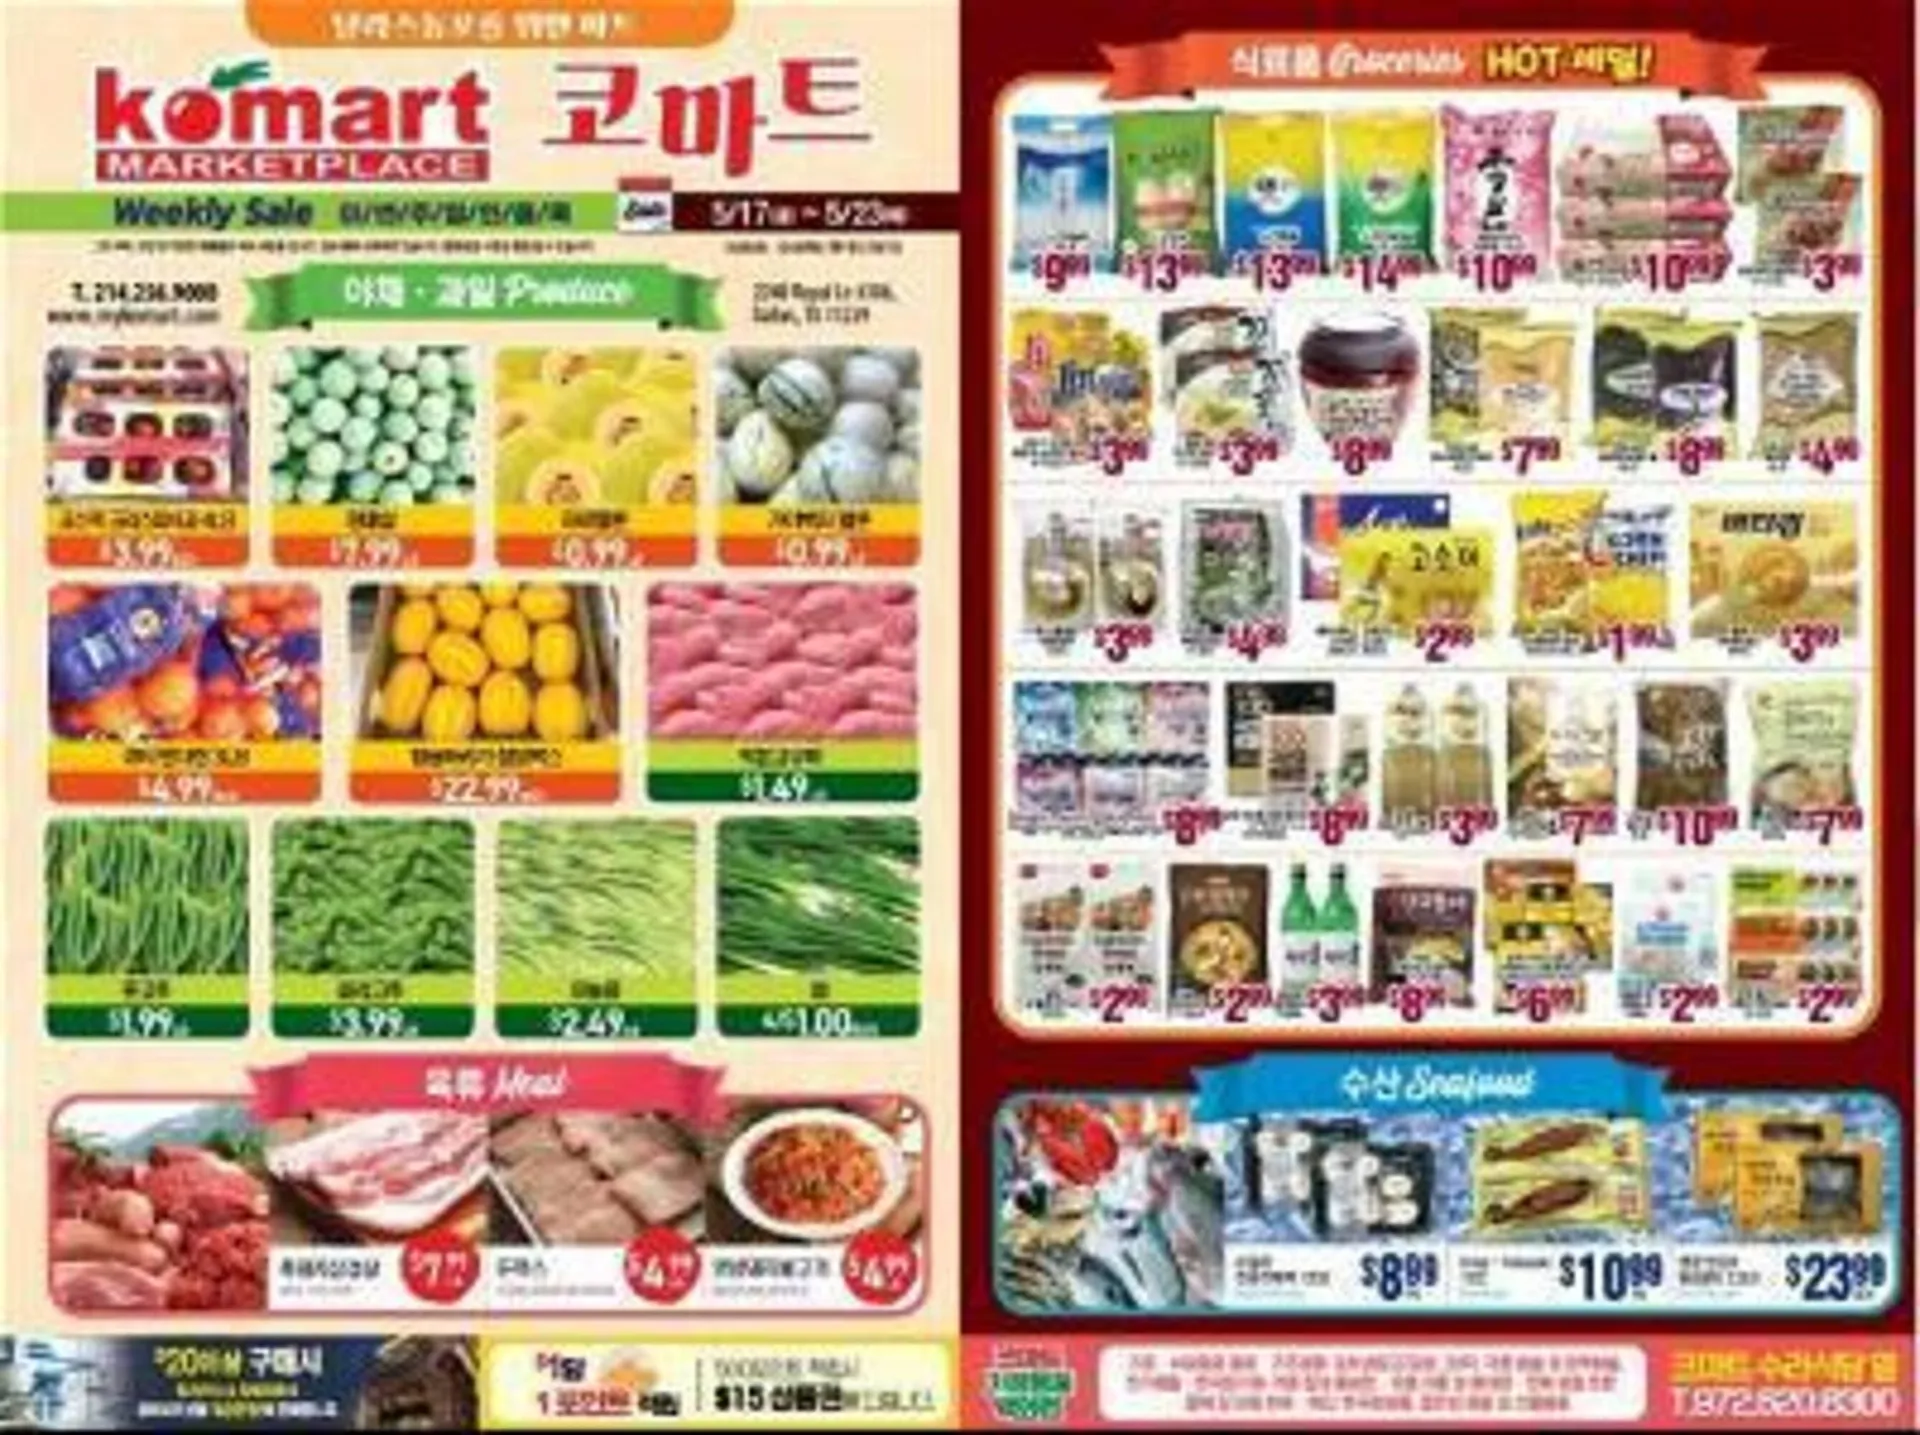 Komart Marketplace Weekly Ad - 1